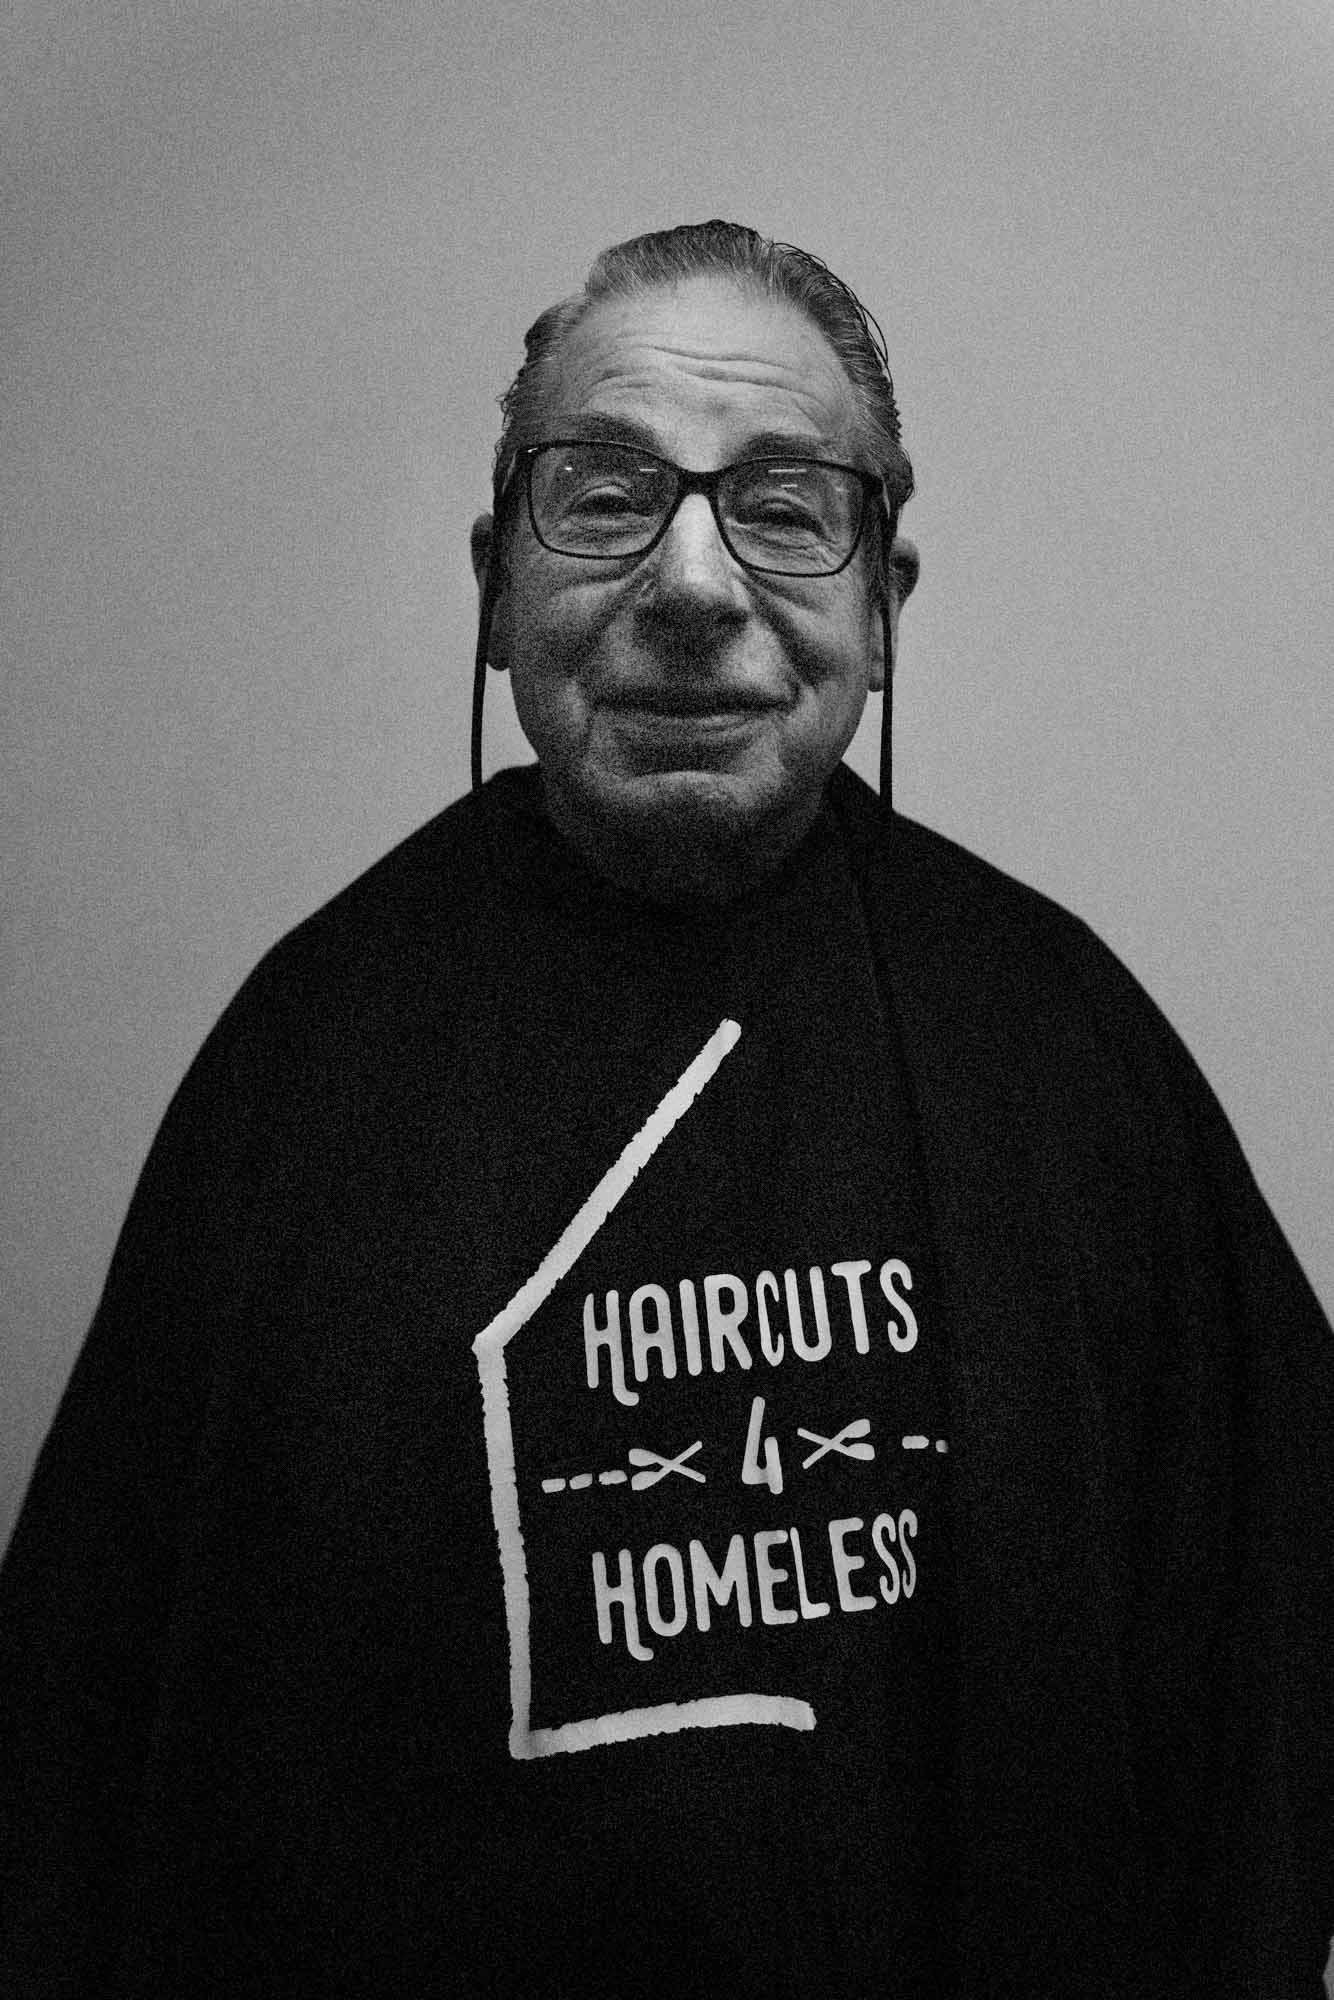 Jack Eames Hair Photographer Haircuts4Homeless Stewart Roberts 10 Year Anniversary-1.jpg